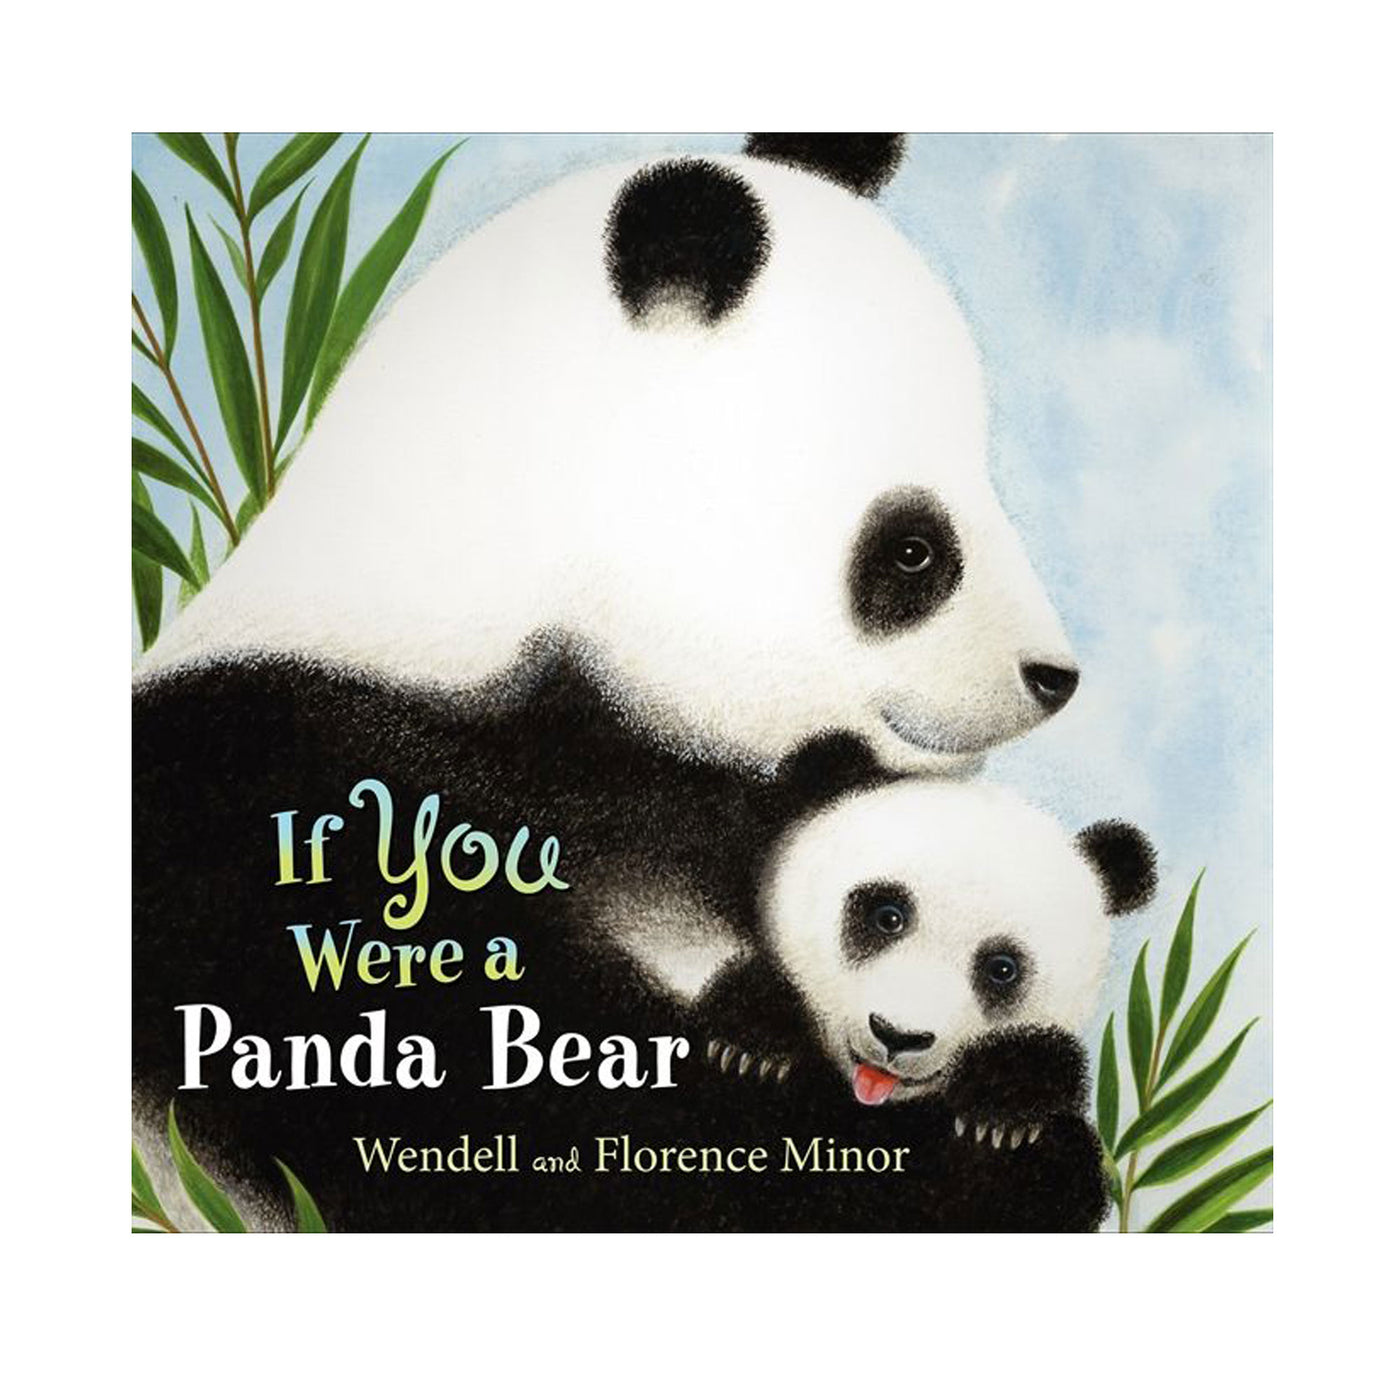 Panda Bear Book & Panda Bear Lambskin sheepskin soft toy & free cotton carry bag